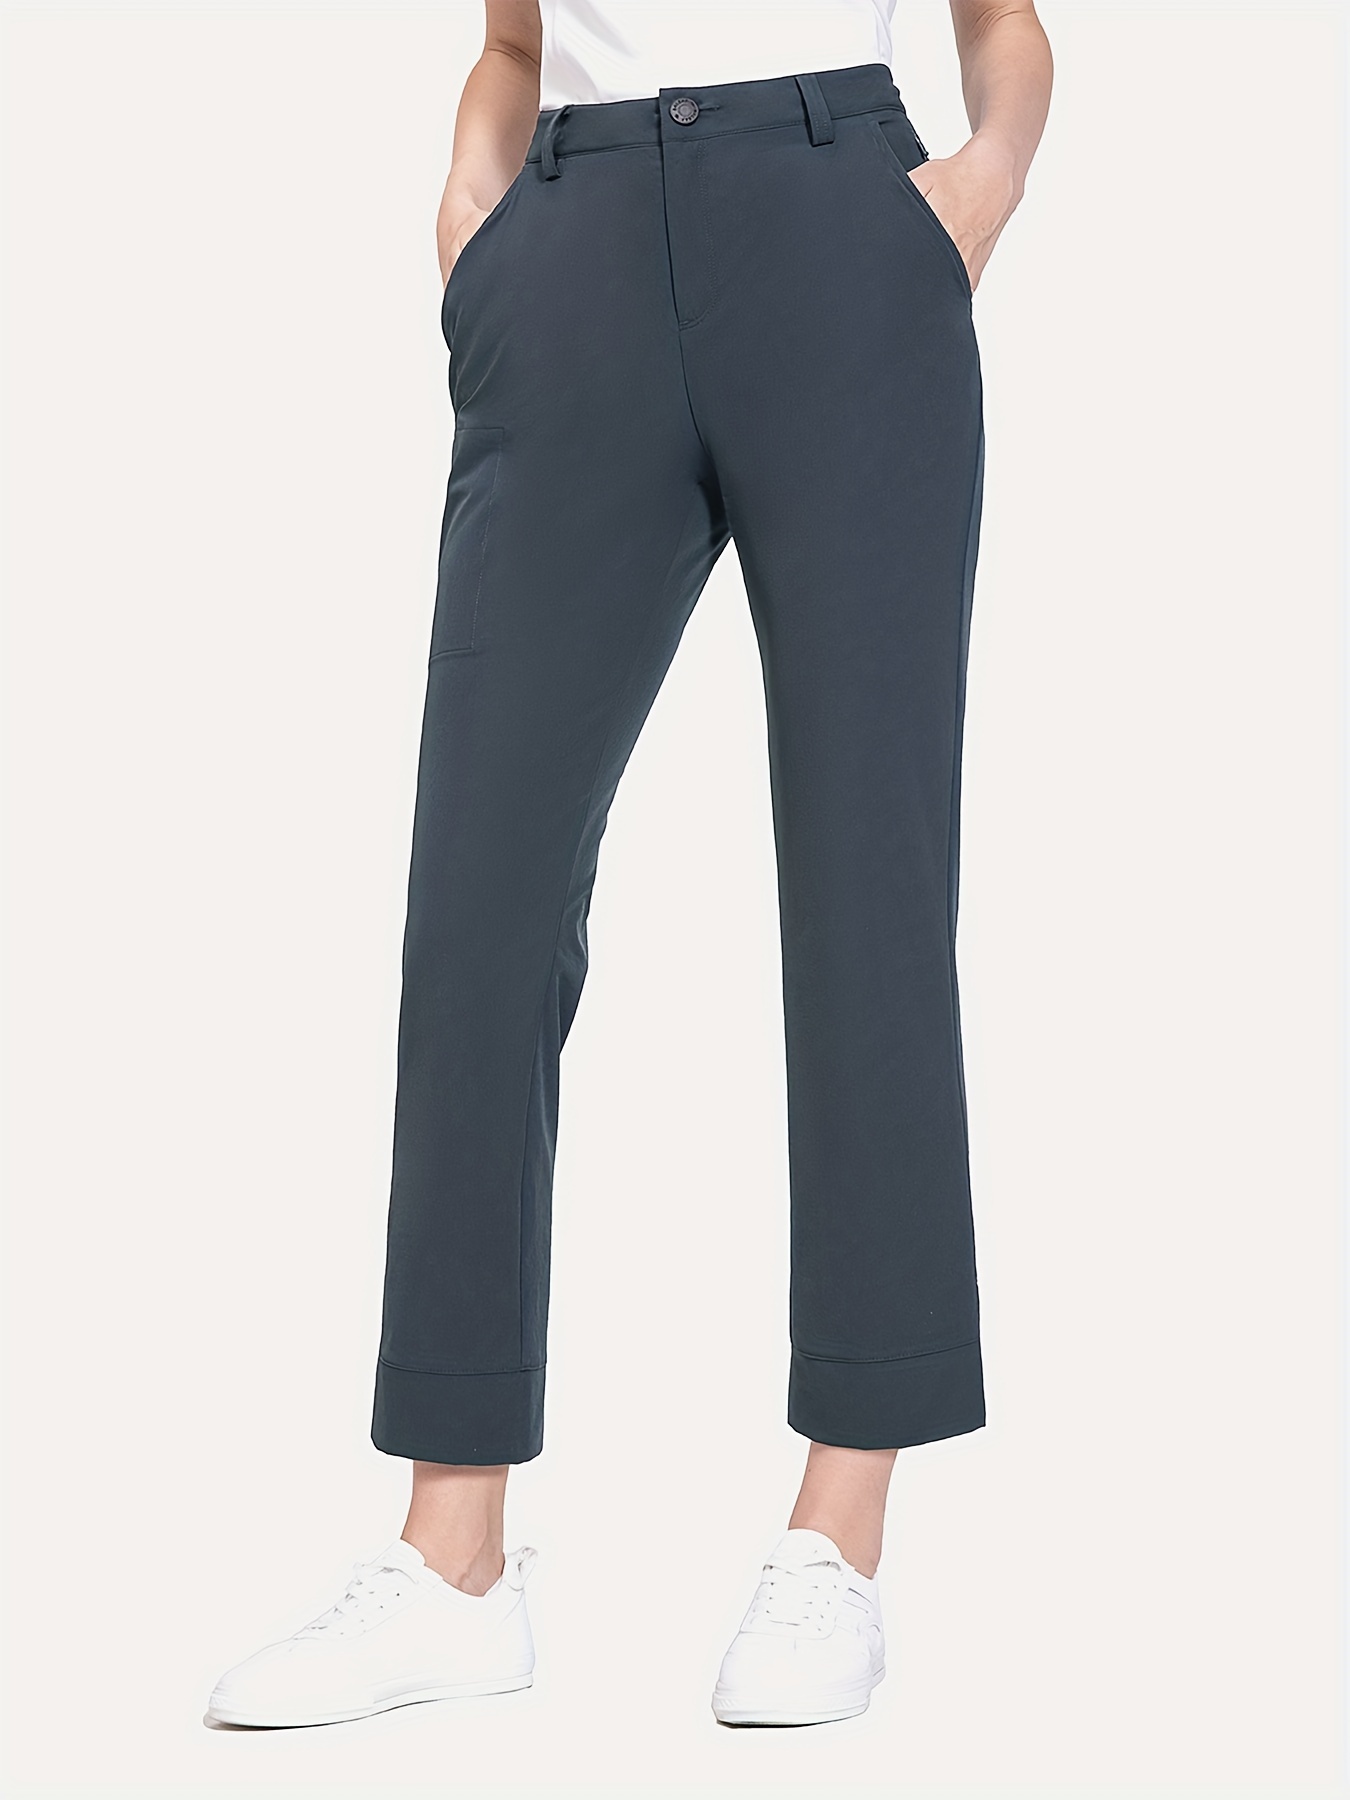 NEW Lole Golf Waterproof Pants Womens Size 10 Grey Regular 698B